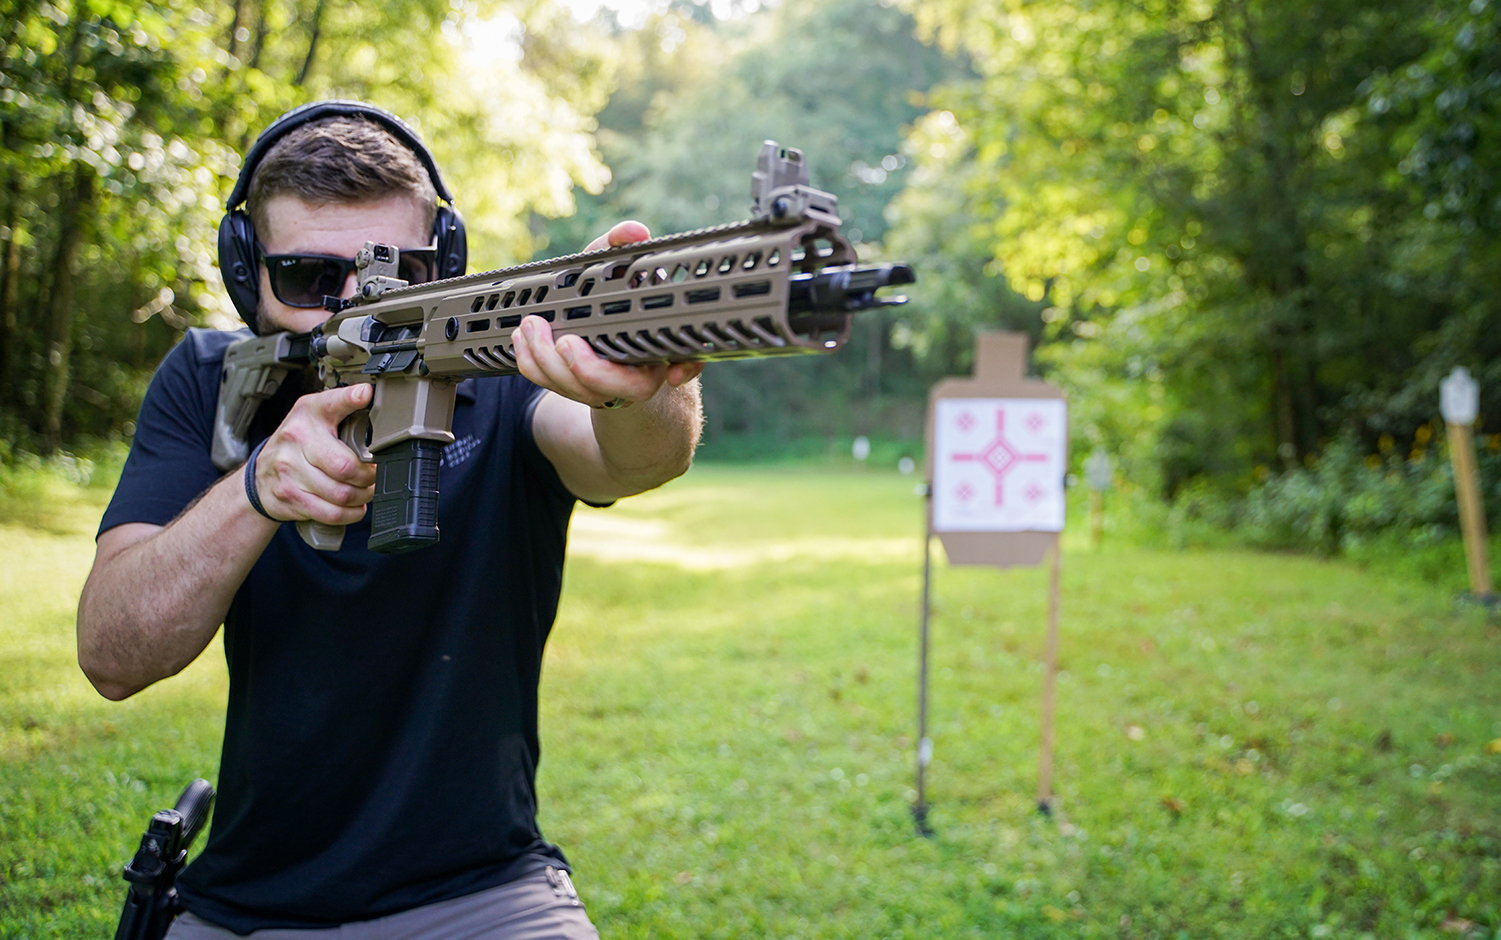 Shooting a 300 Blackout rifle at a shooting range